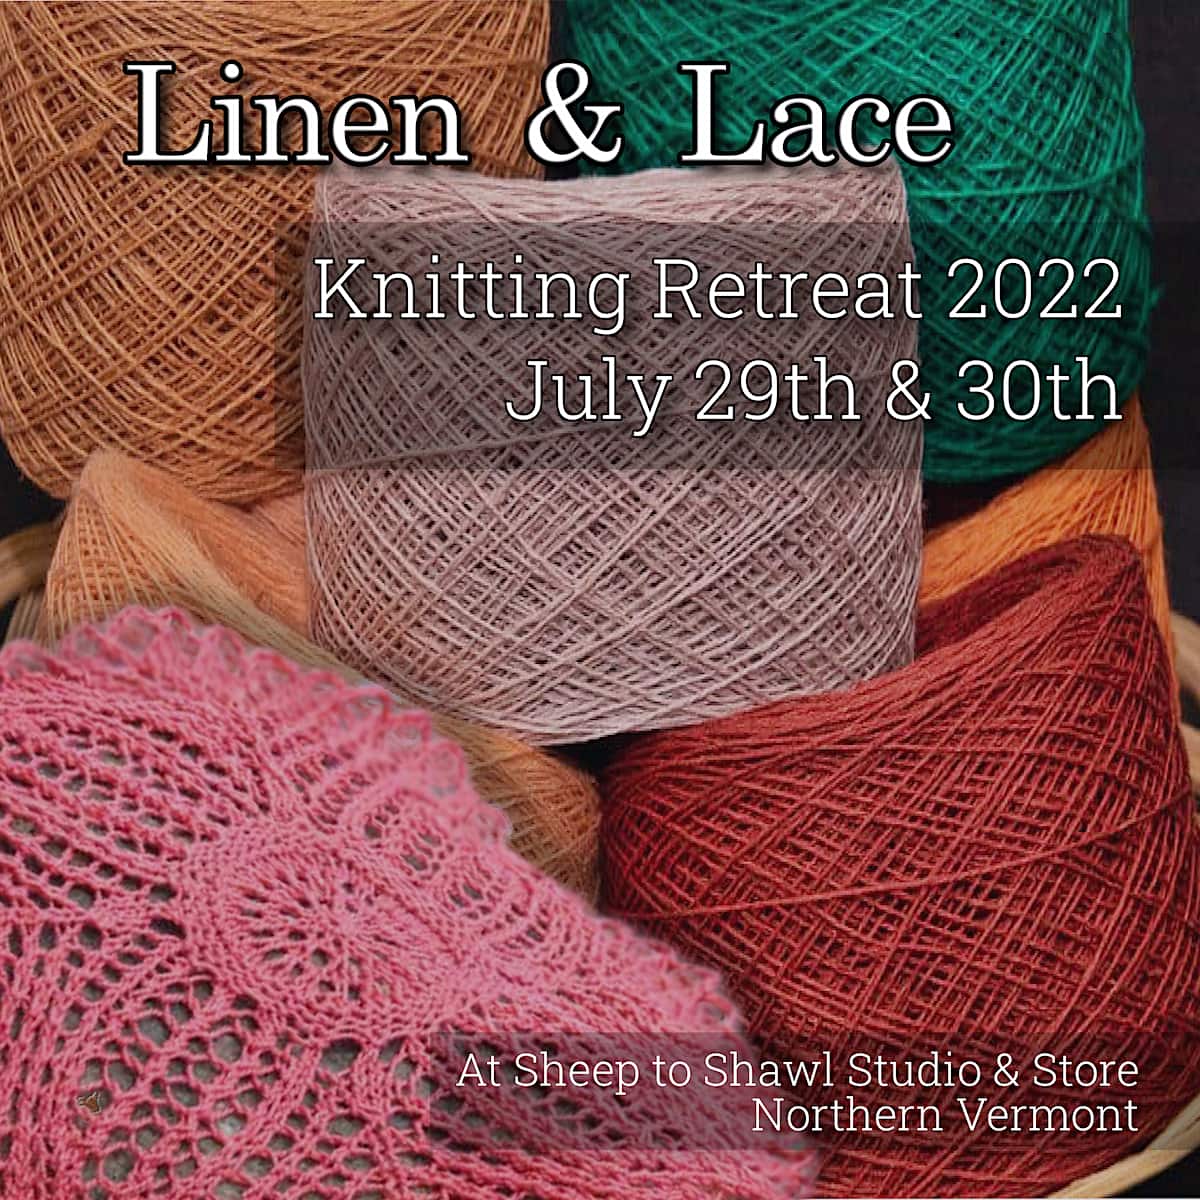 Northeast Kingdom Vermont Knitting Retreats 6